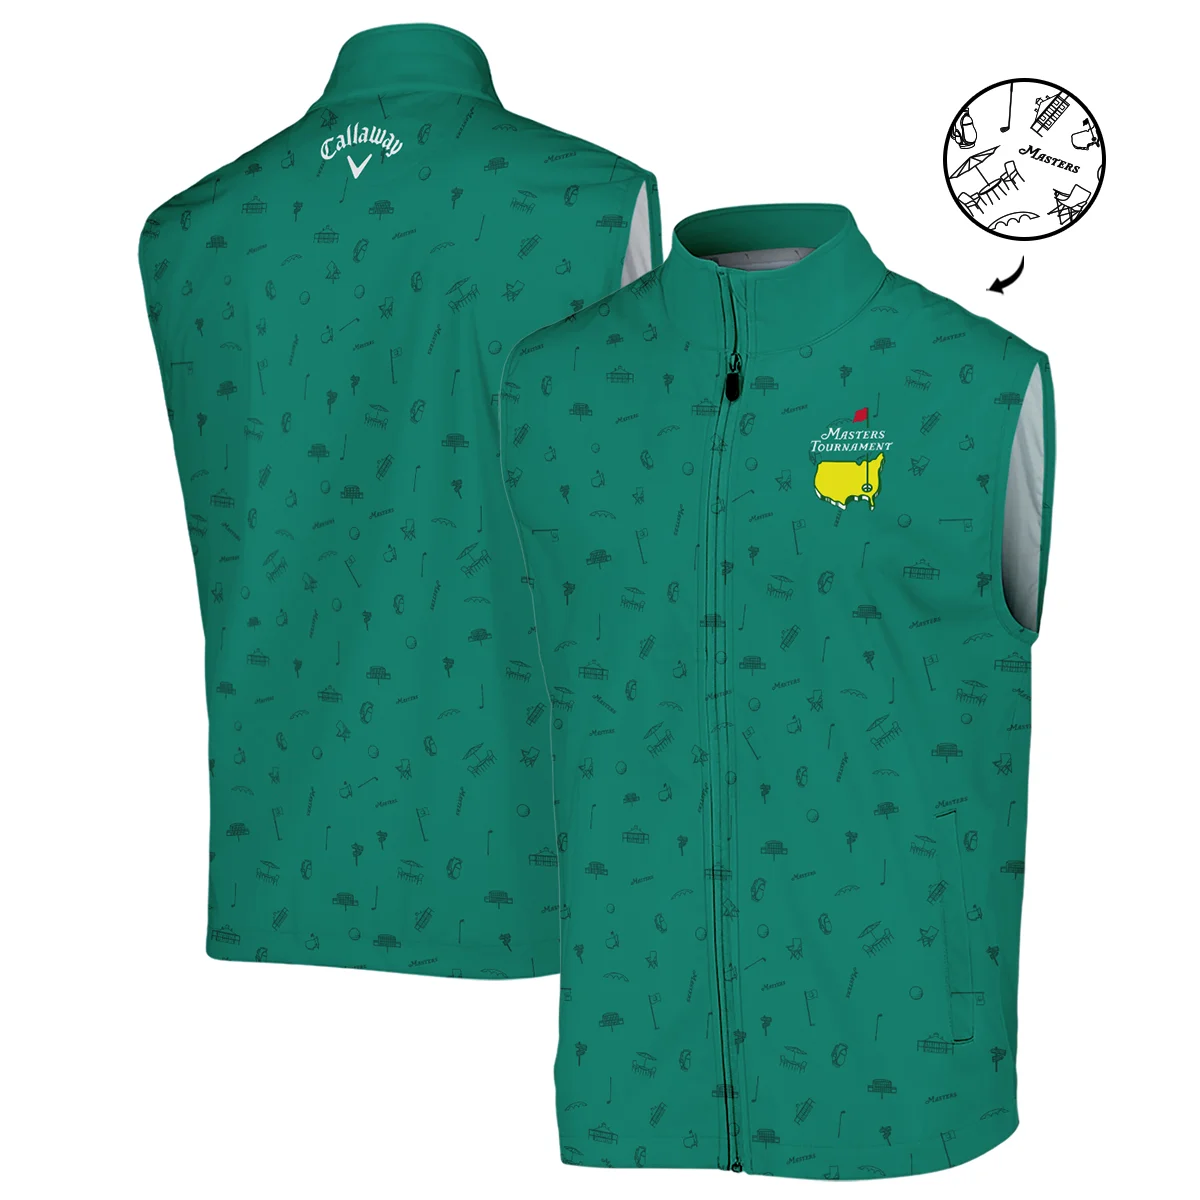 Golf Masters Tournament Callaway Unisex Sweatshirt Augusta Icons Pattern Green Golf Sports All Over Print Sweatshirt